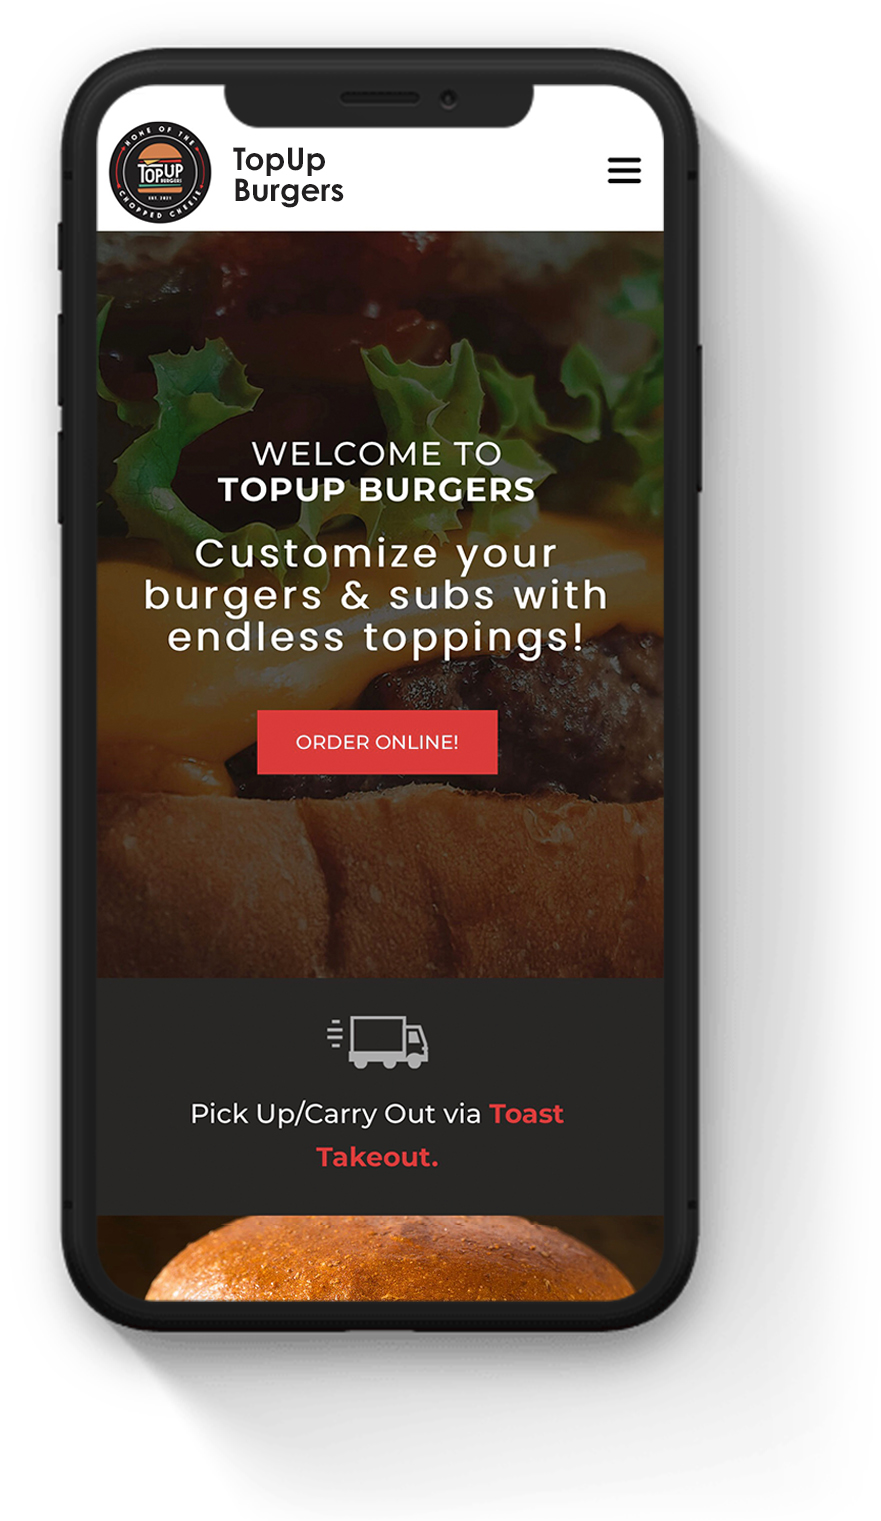 Mobile Restaurant Web Design